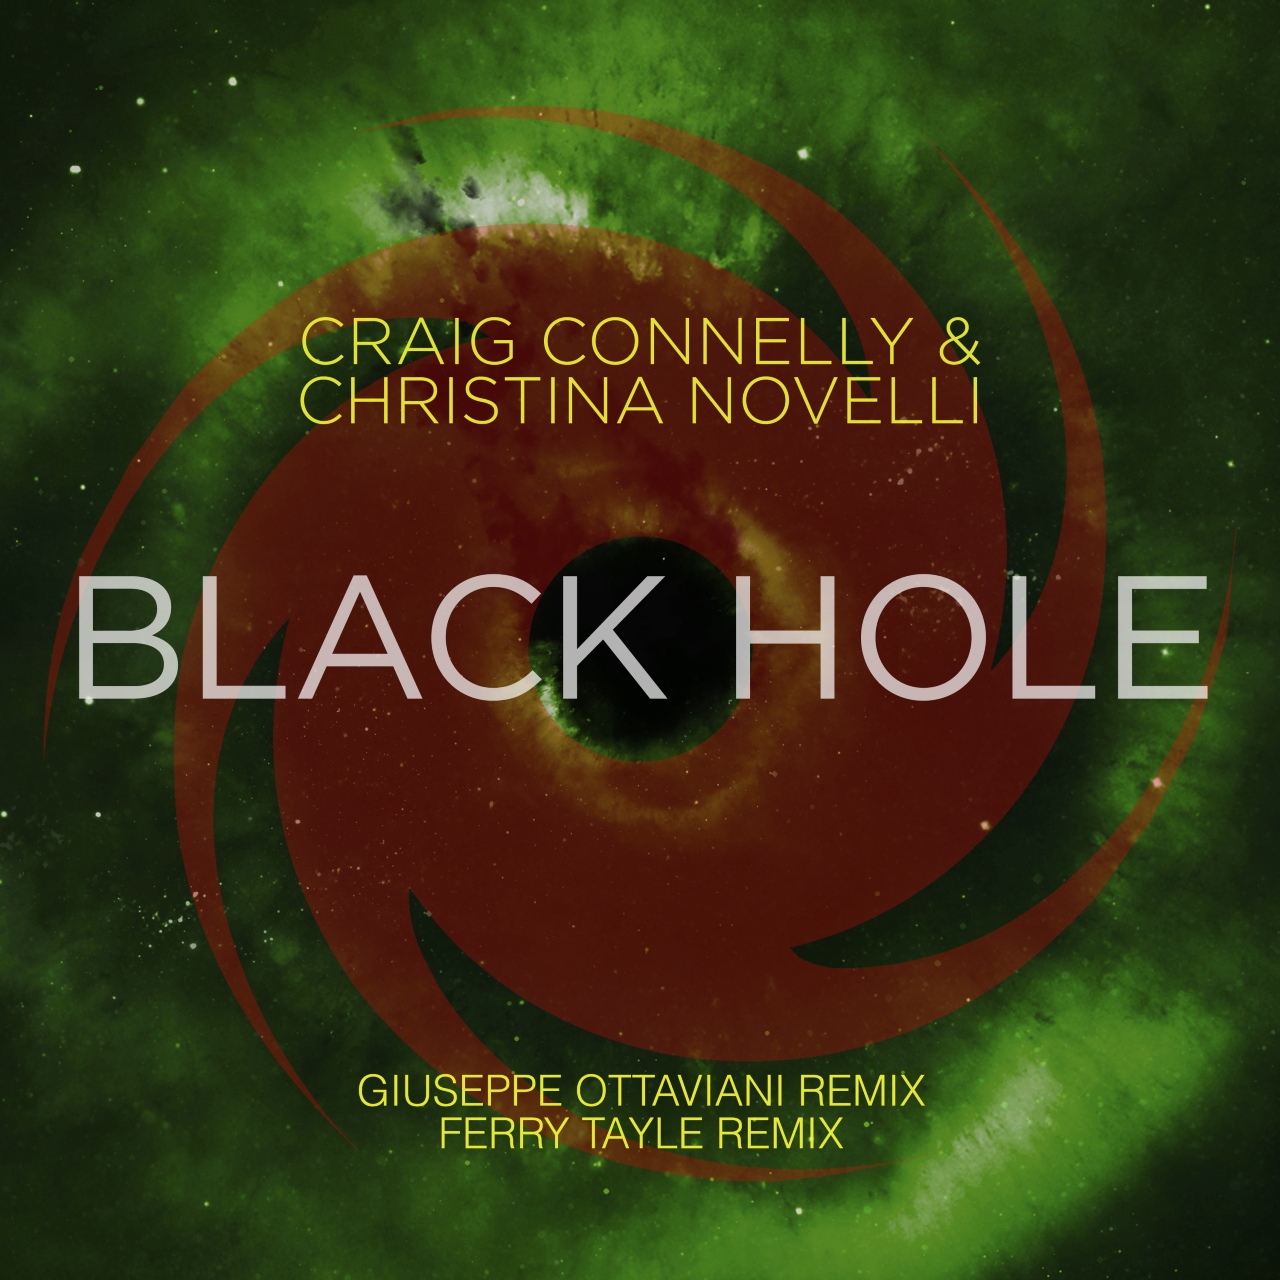 Craig Connelly and Christina Novelli presents Black Hole (Giuseppe Ottaviani plus Ferry Tayle Remixes) on Black Hole Recordings